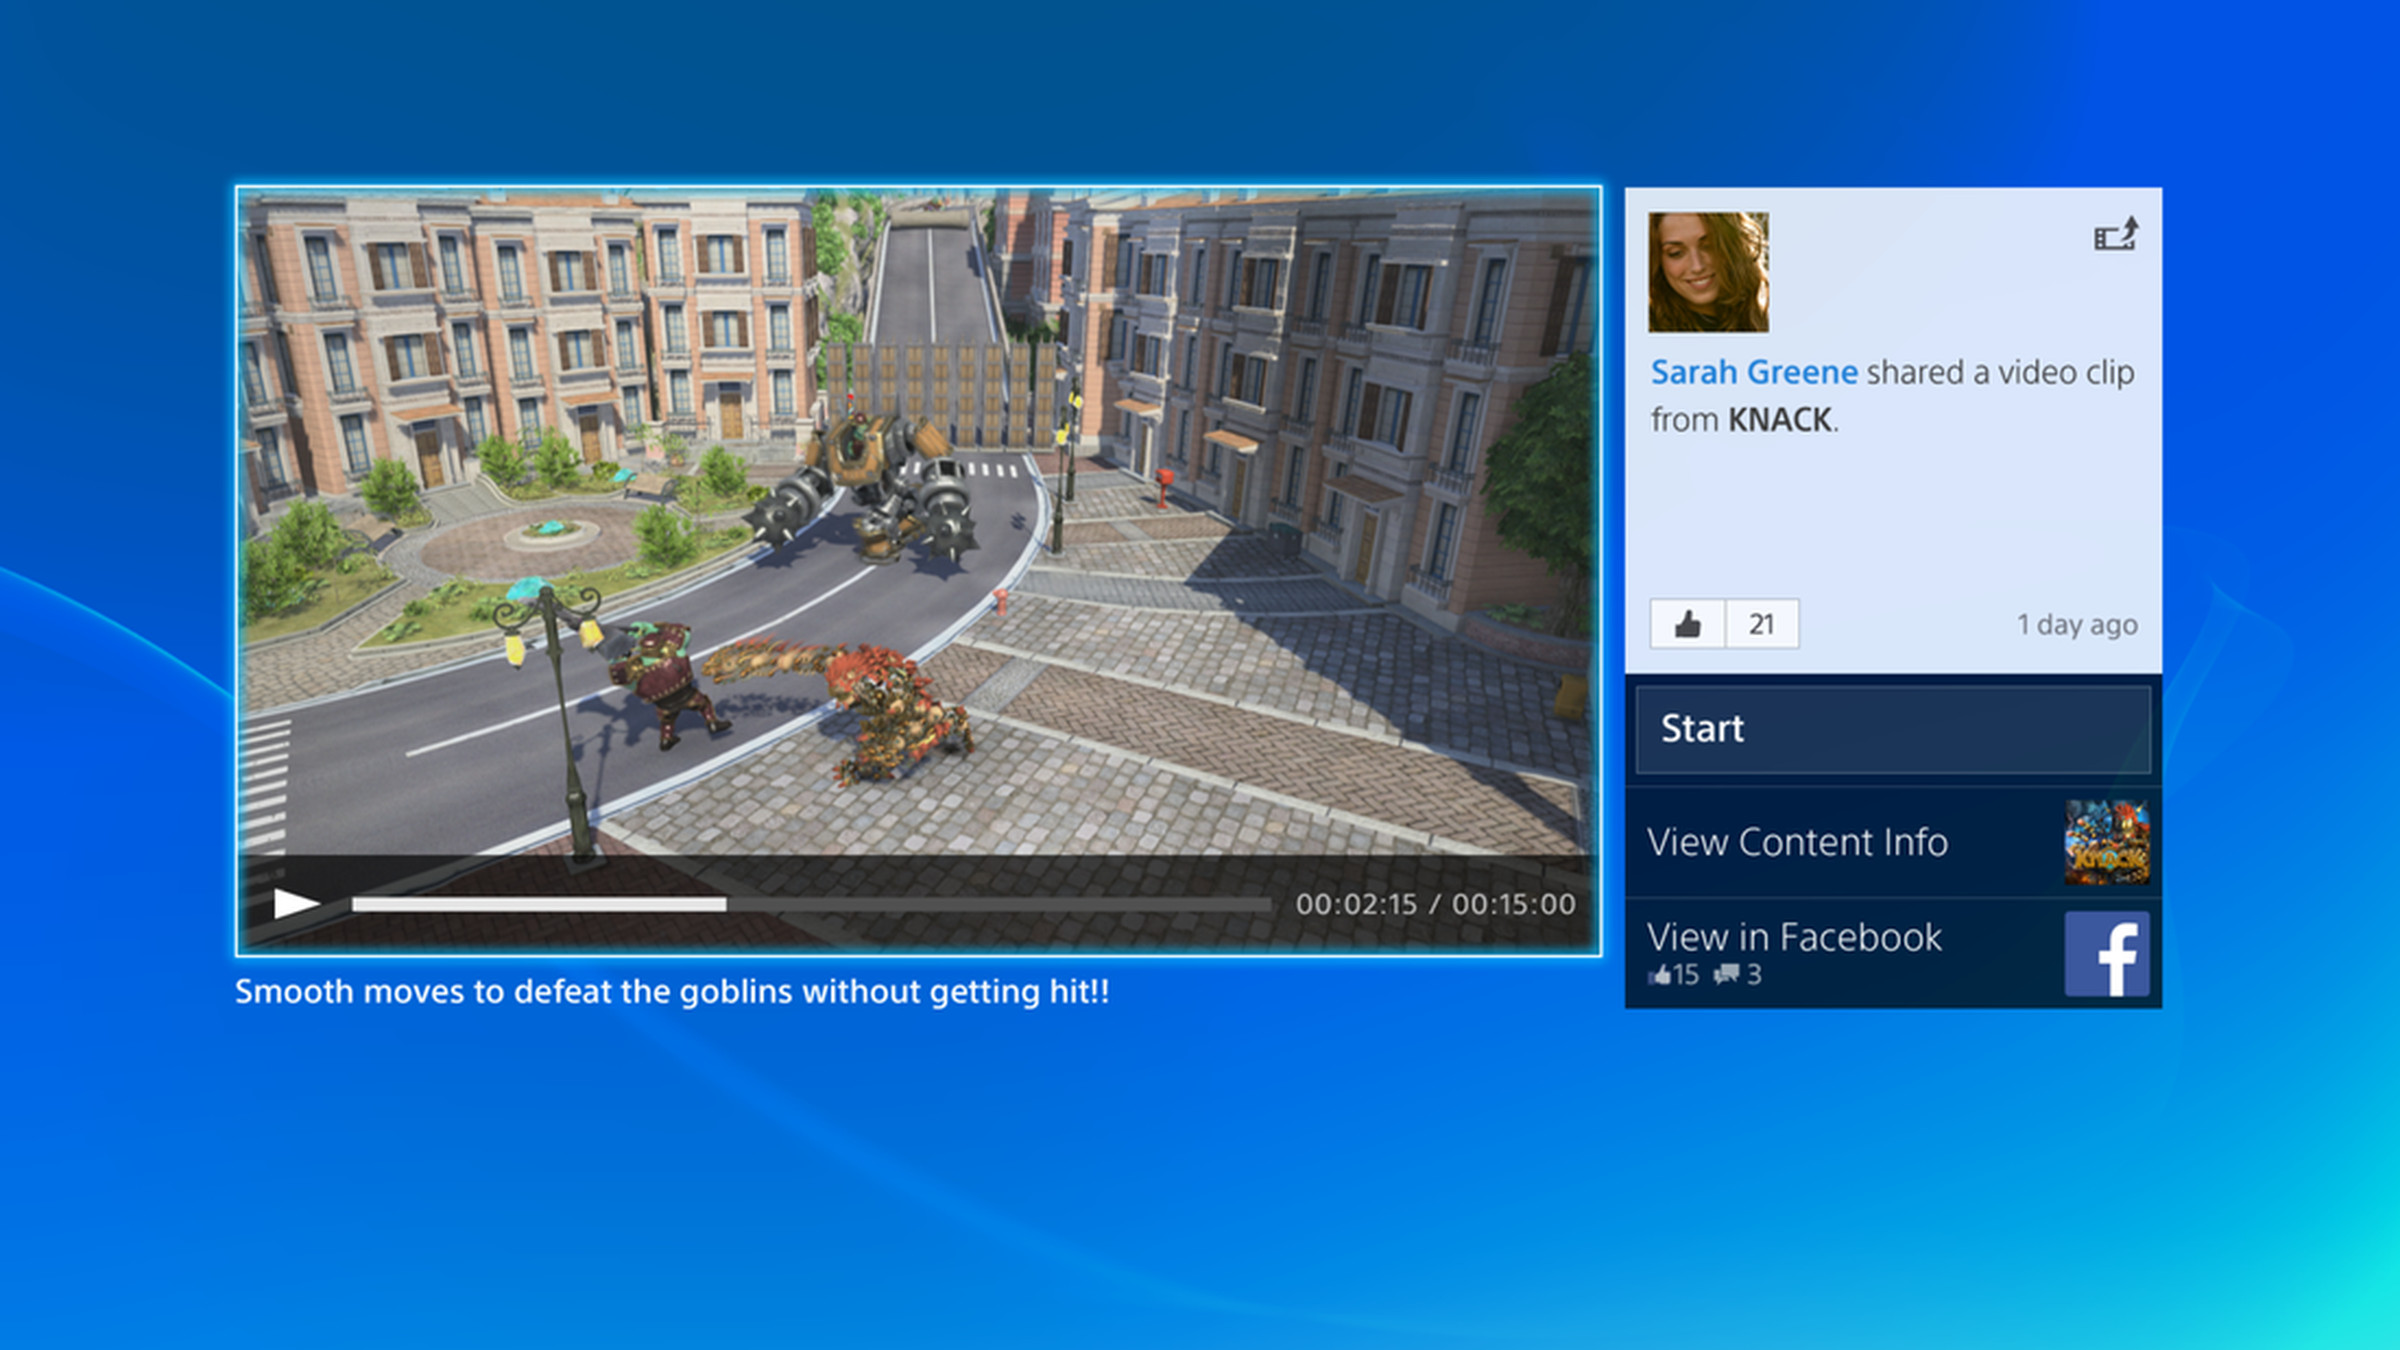 PlayStation 4 UI screenshots